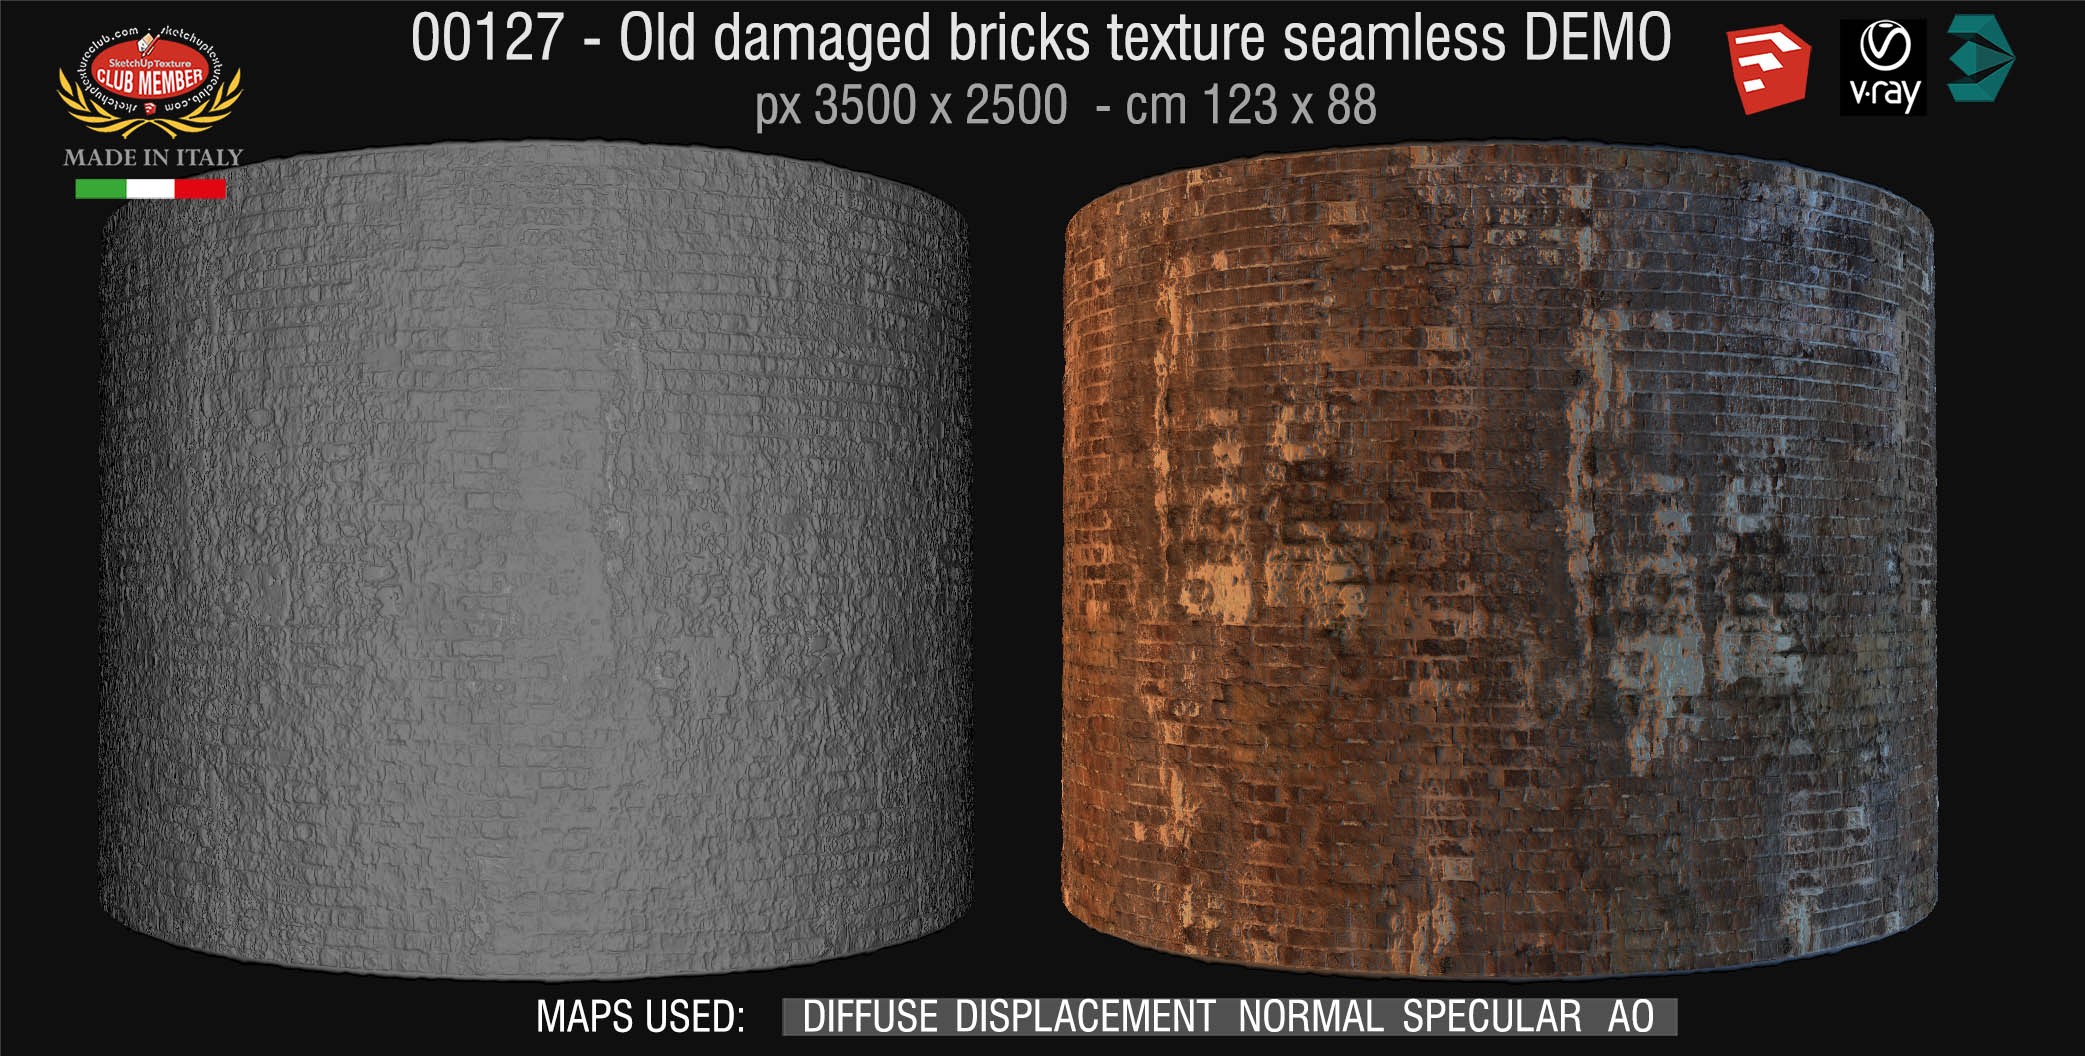 00127 HR Damaged bricks texture seamless + maps DEMO